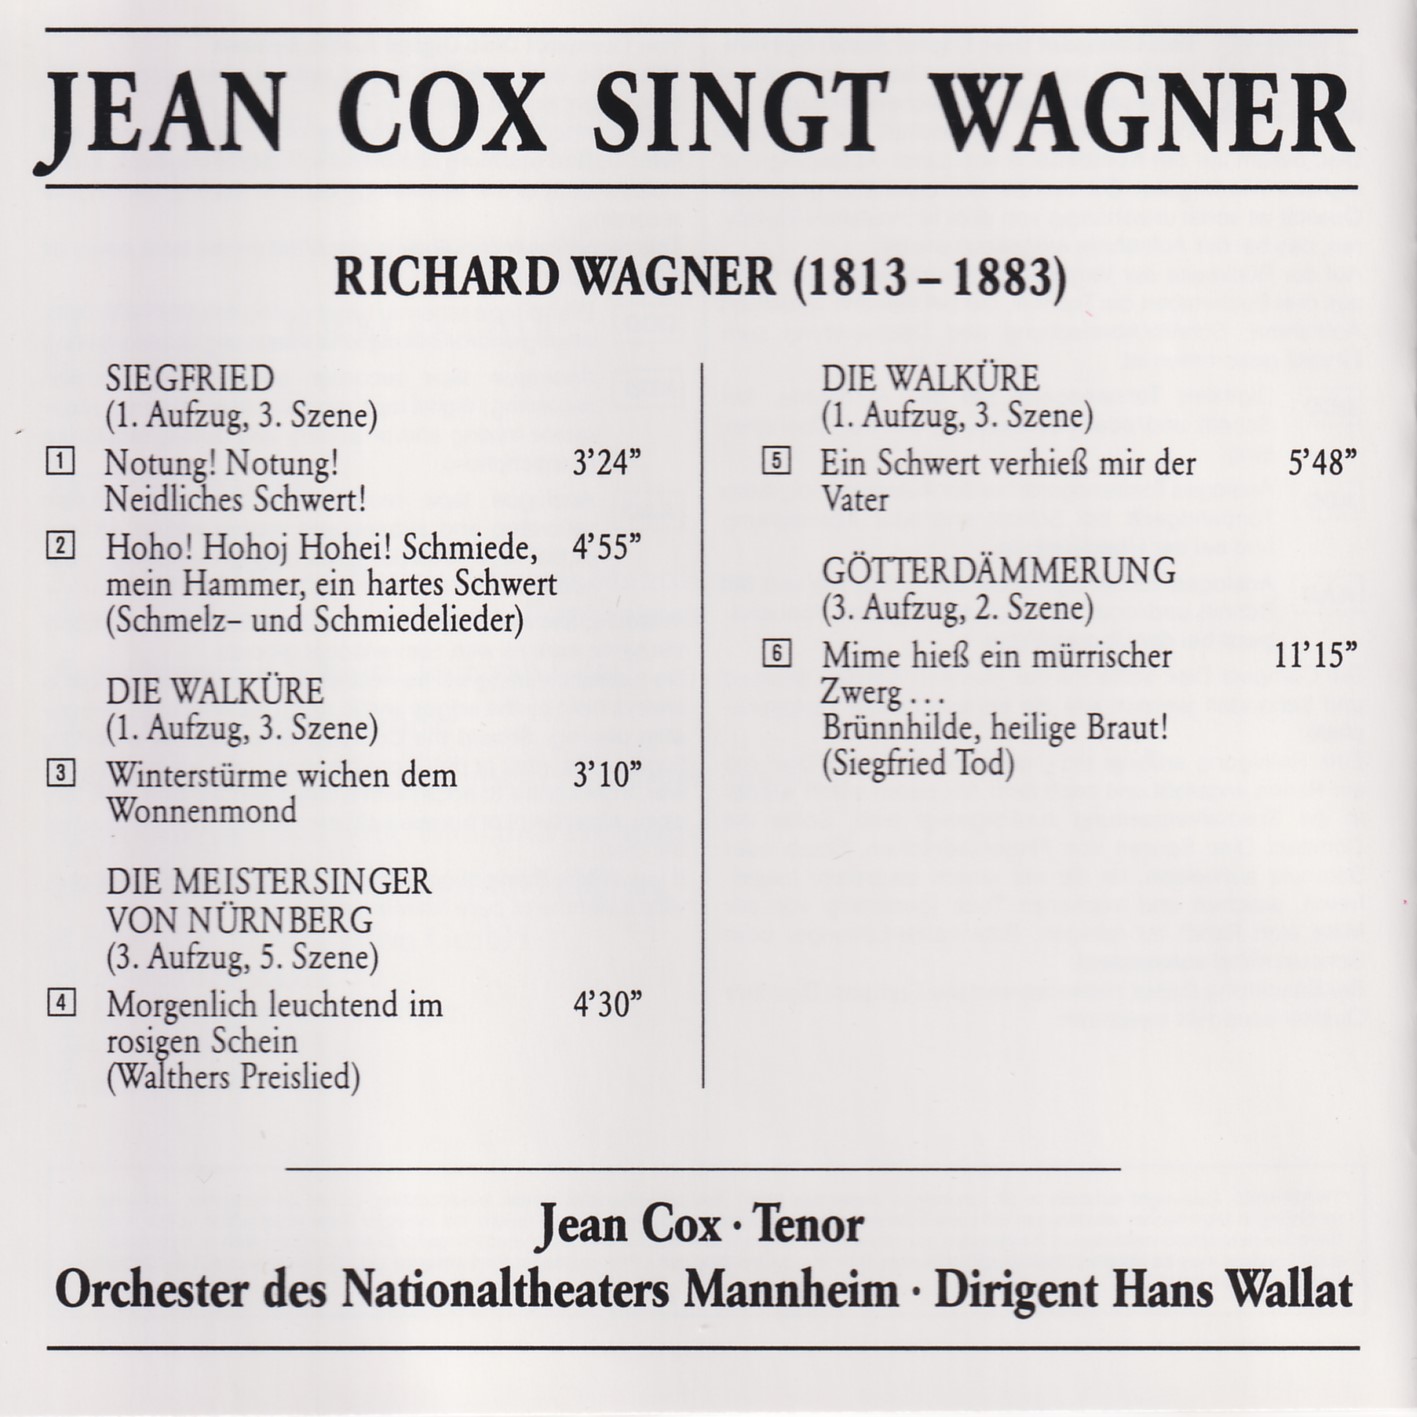 Jean Cox singt Wagner